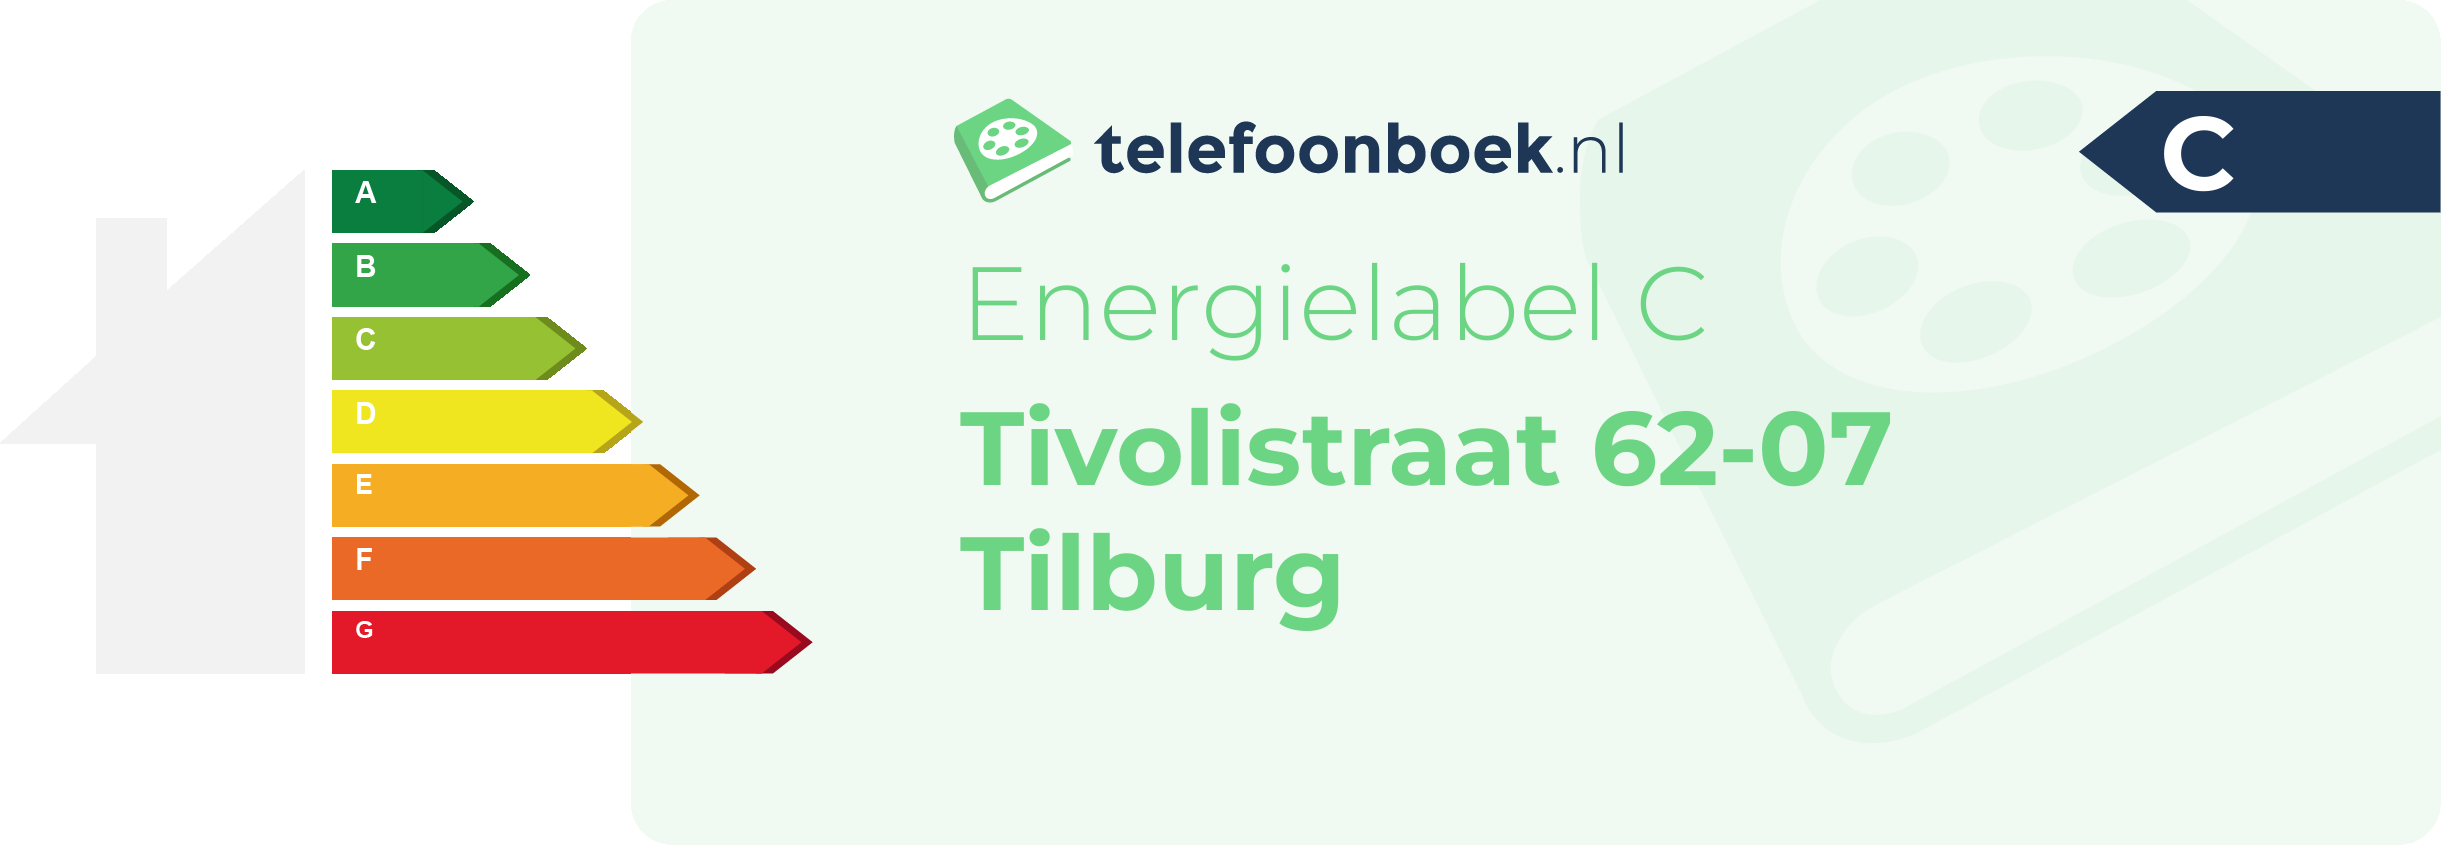 Energielabel Tivolistraat 62-07 Tilburg